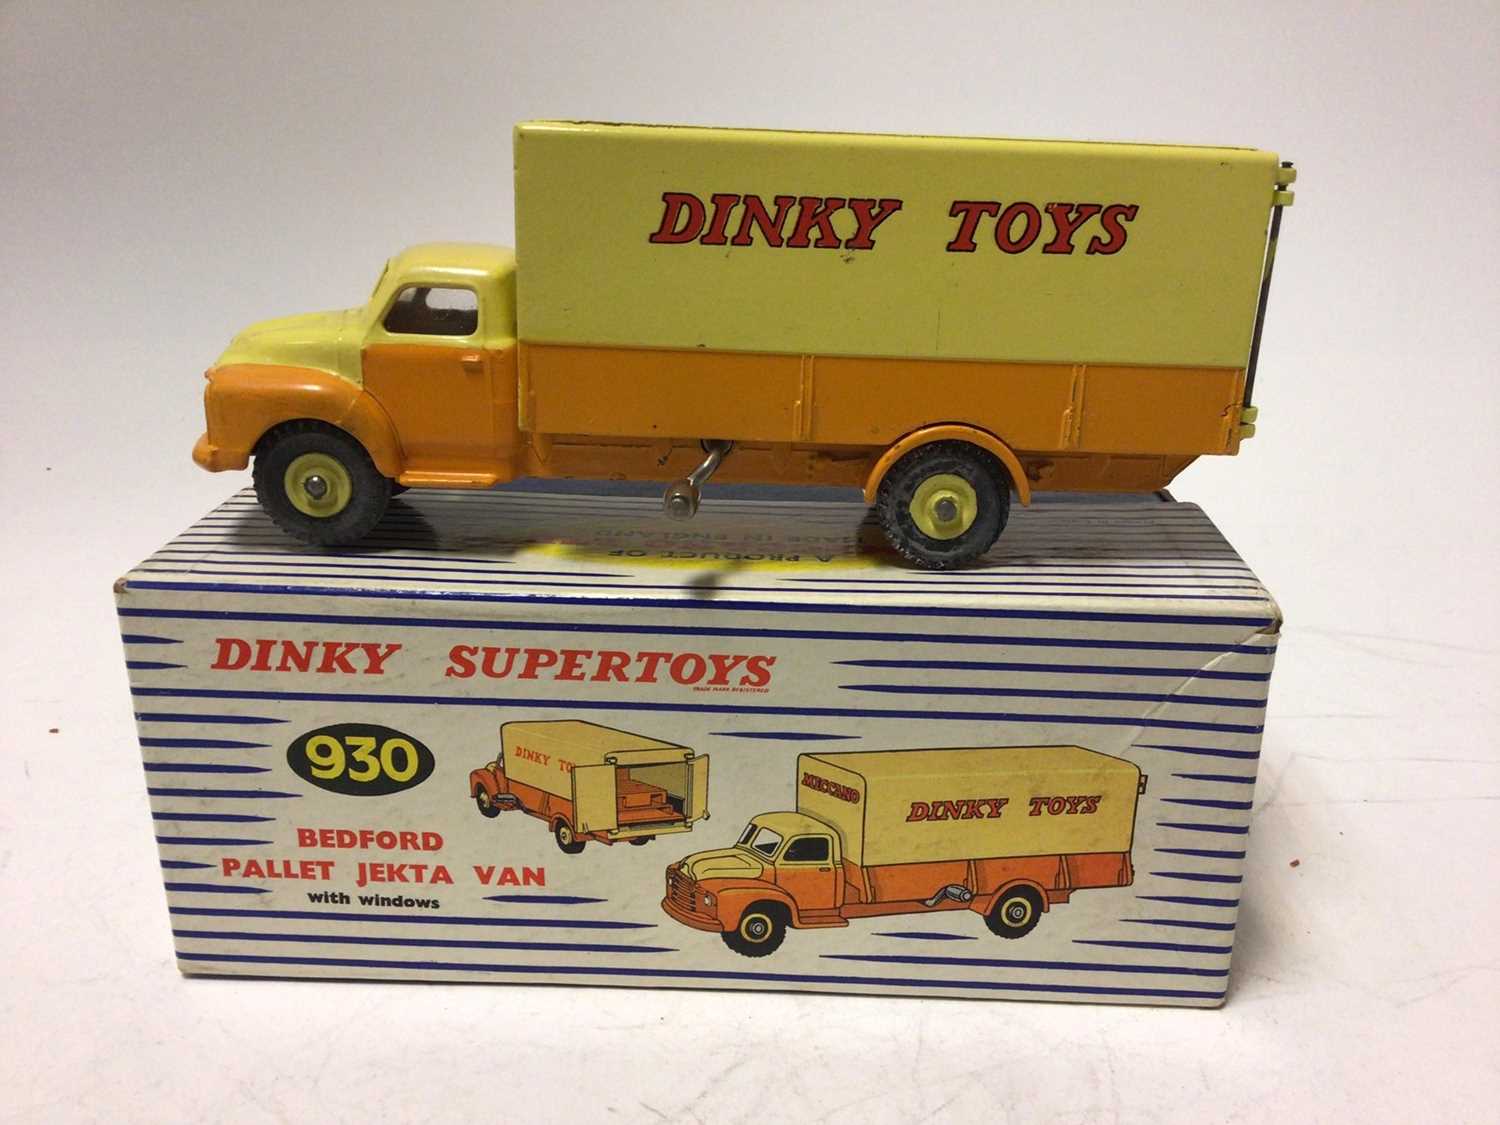 Dinky Supertoys Beford pallet jekta van Dinky toy No. 930 boxed